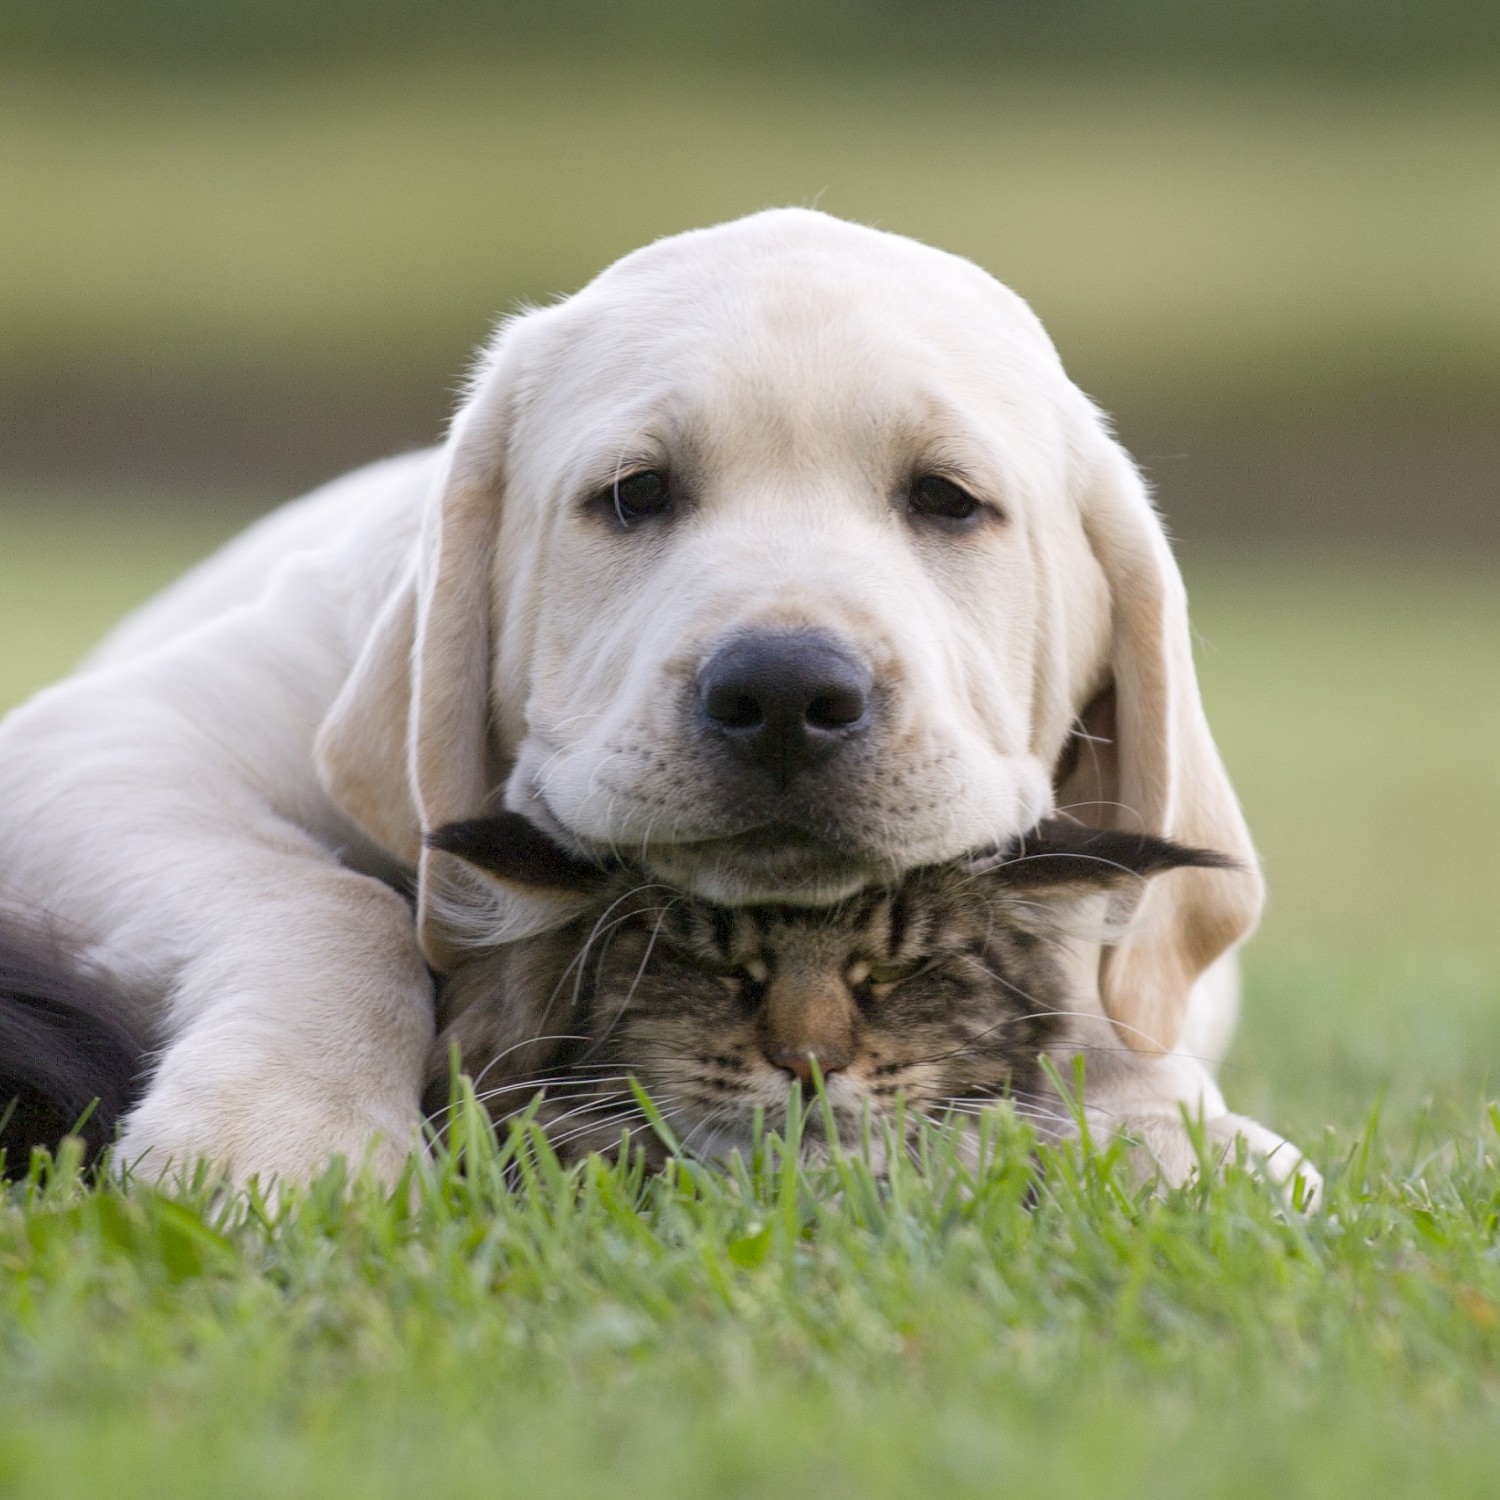 Canine & Feline Care - Dog & Cat in Grass